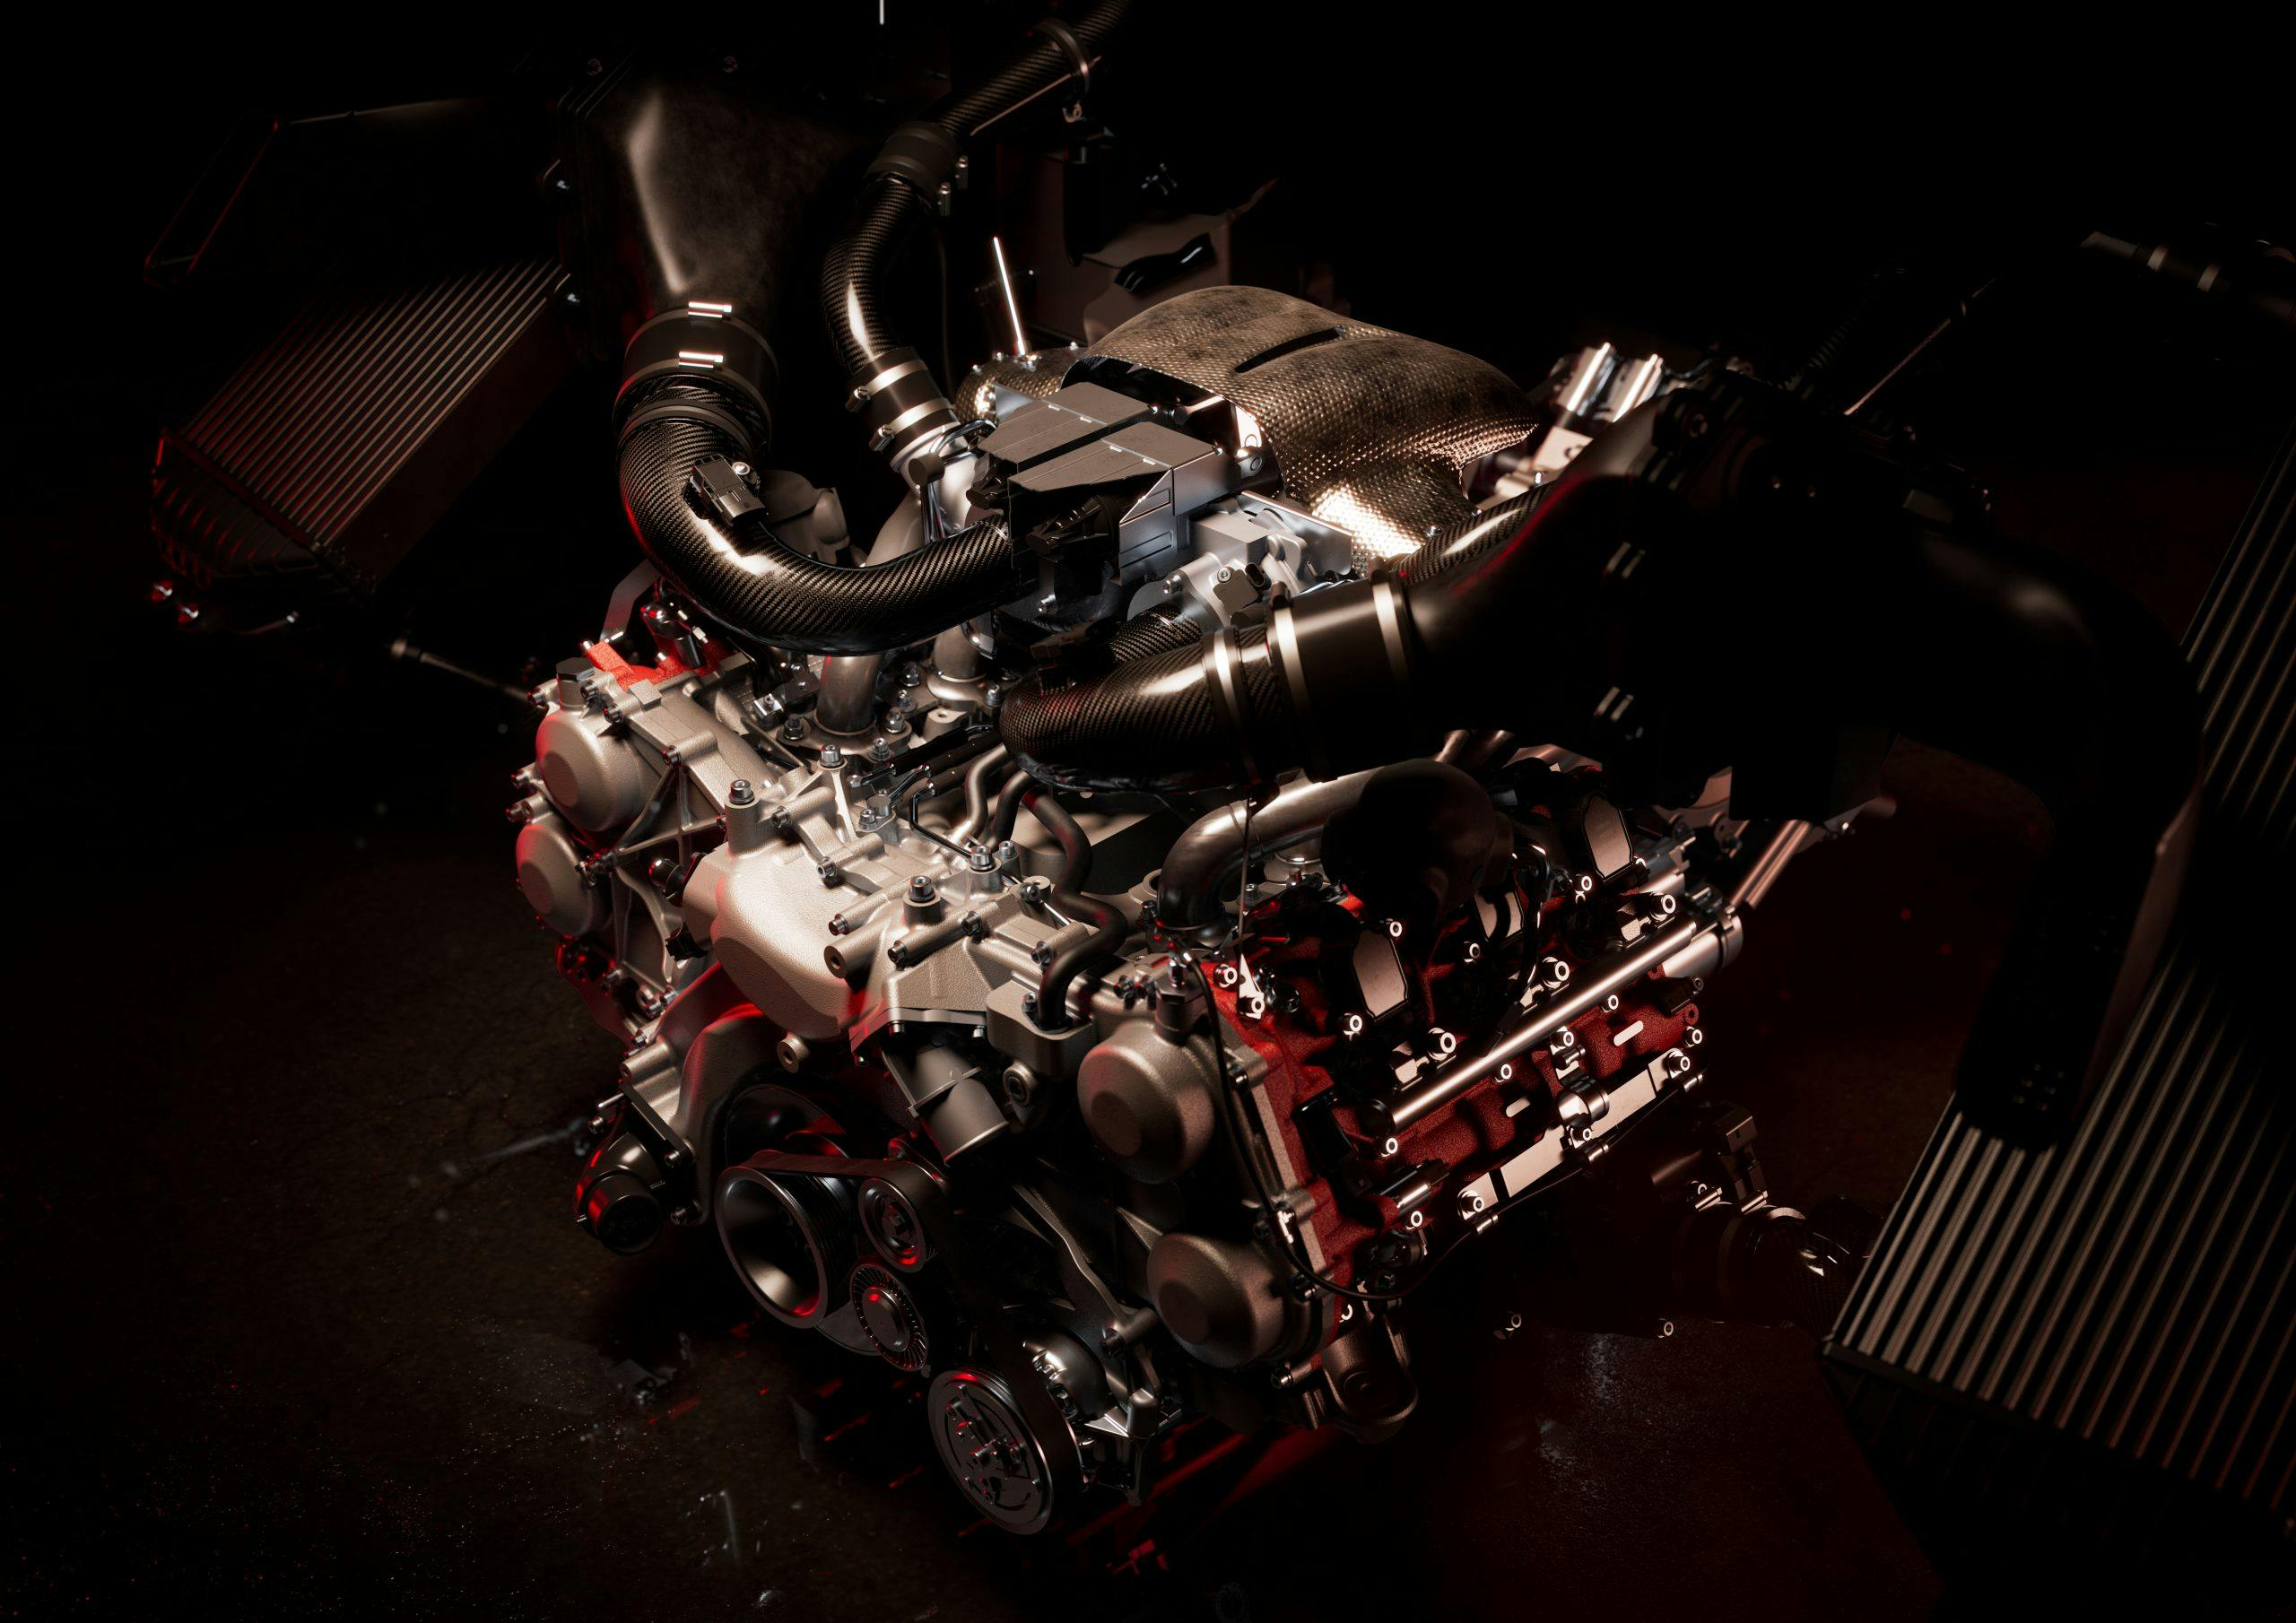 Ferrari 296 GT3 racecar engine angled